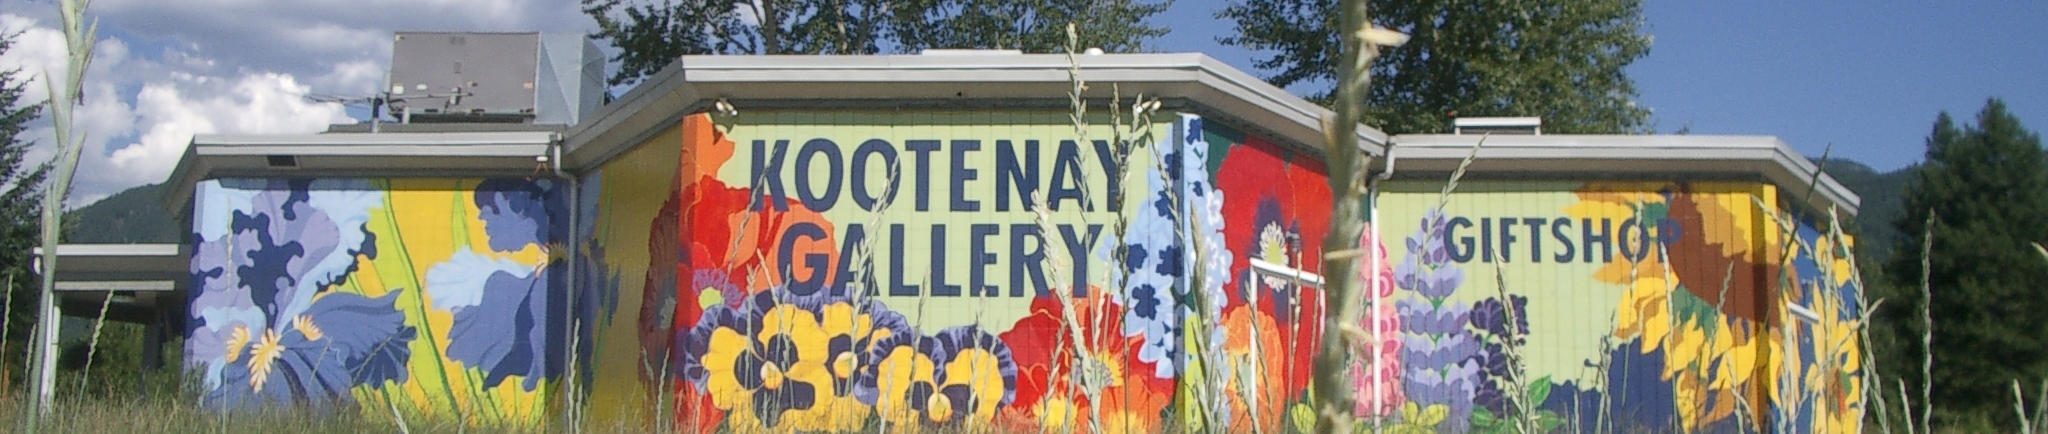 Kootenay Gallery